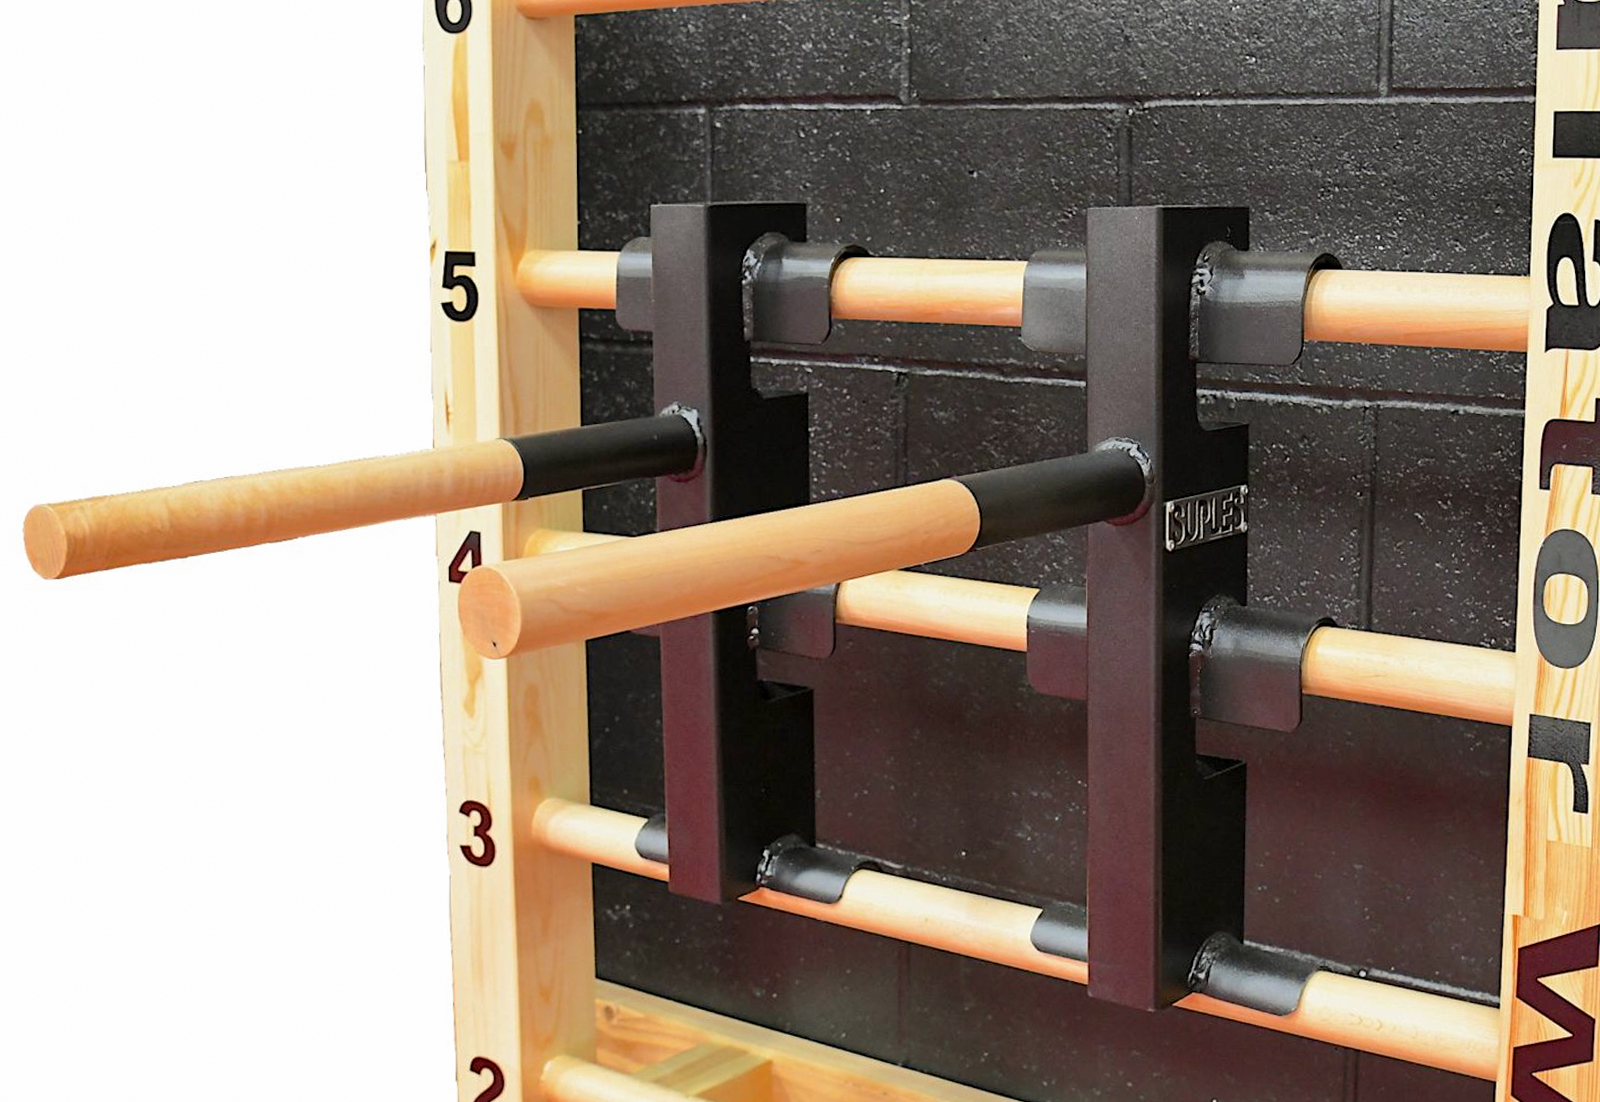 GLADIATOR WALL ACCESSORY – SUPLES WALL DIP BAR (wooden handles)